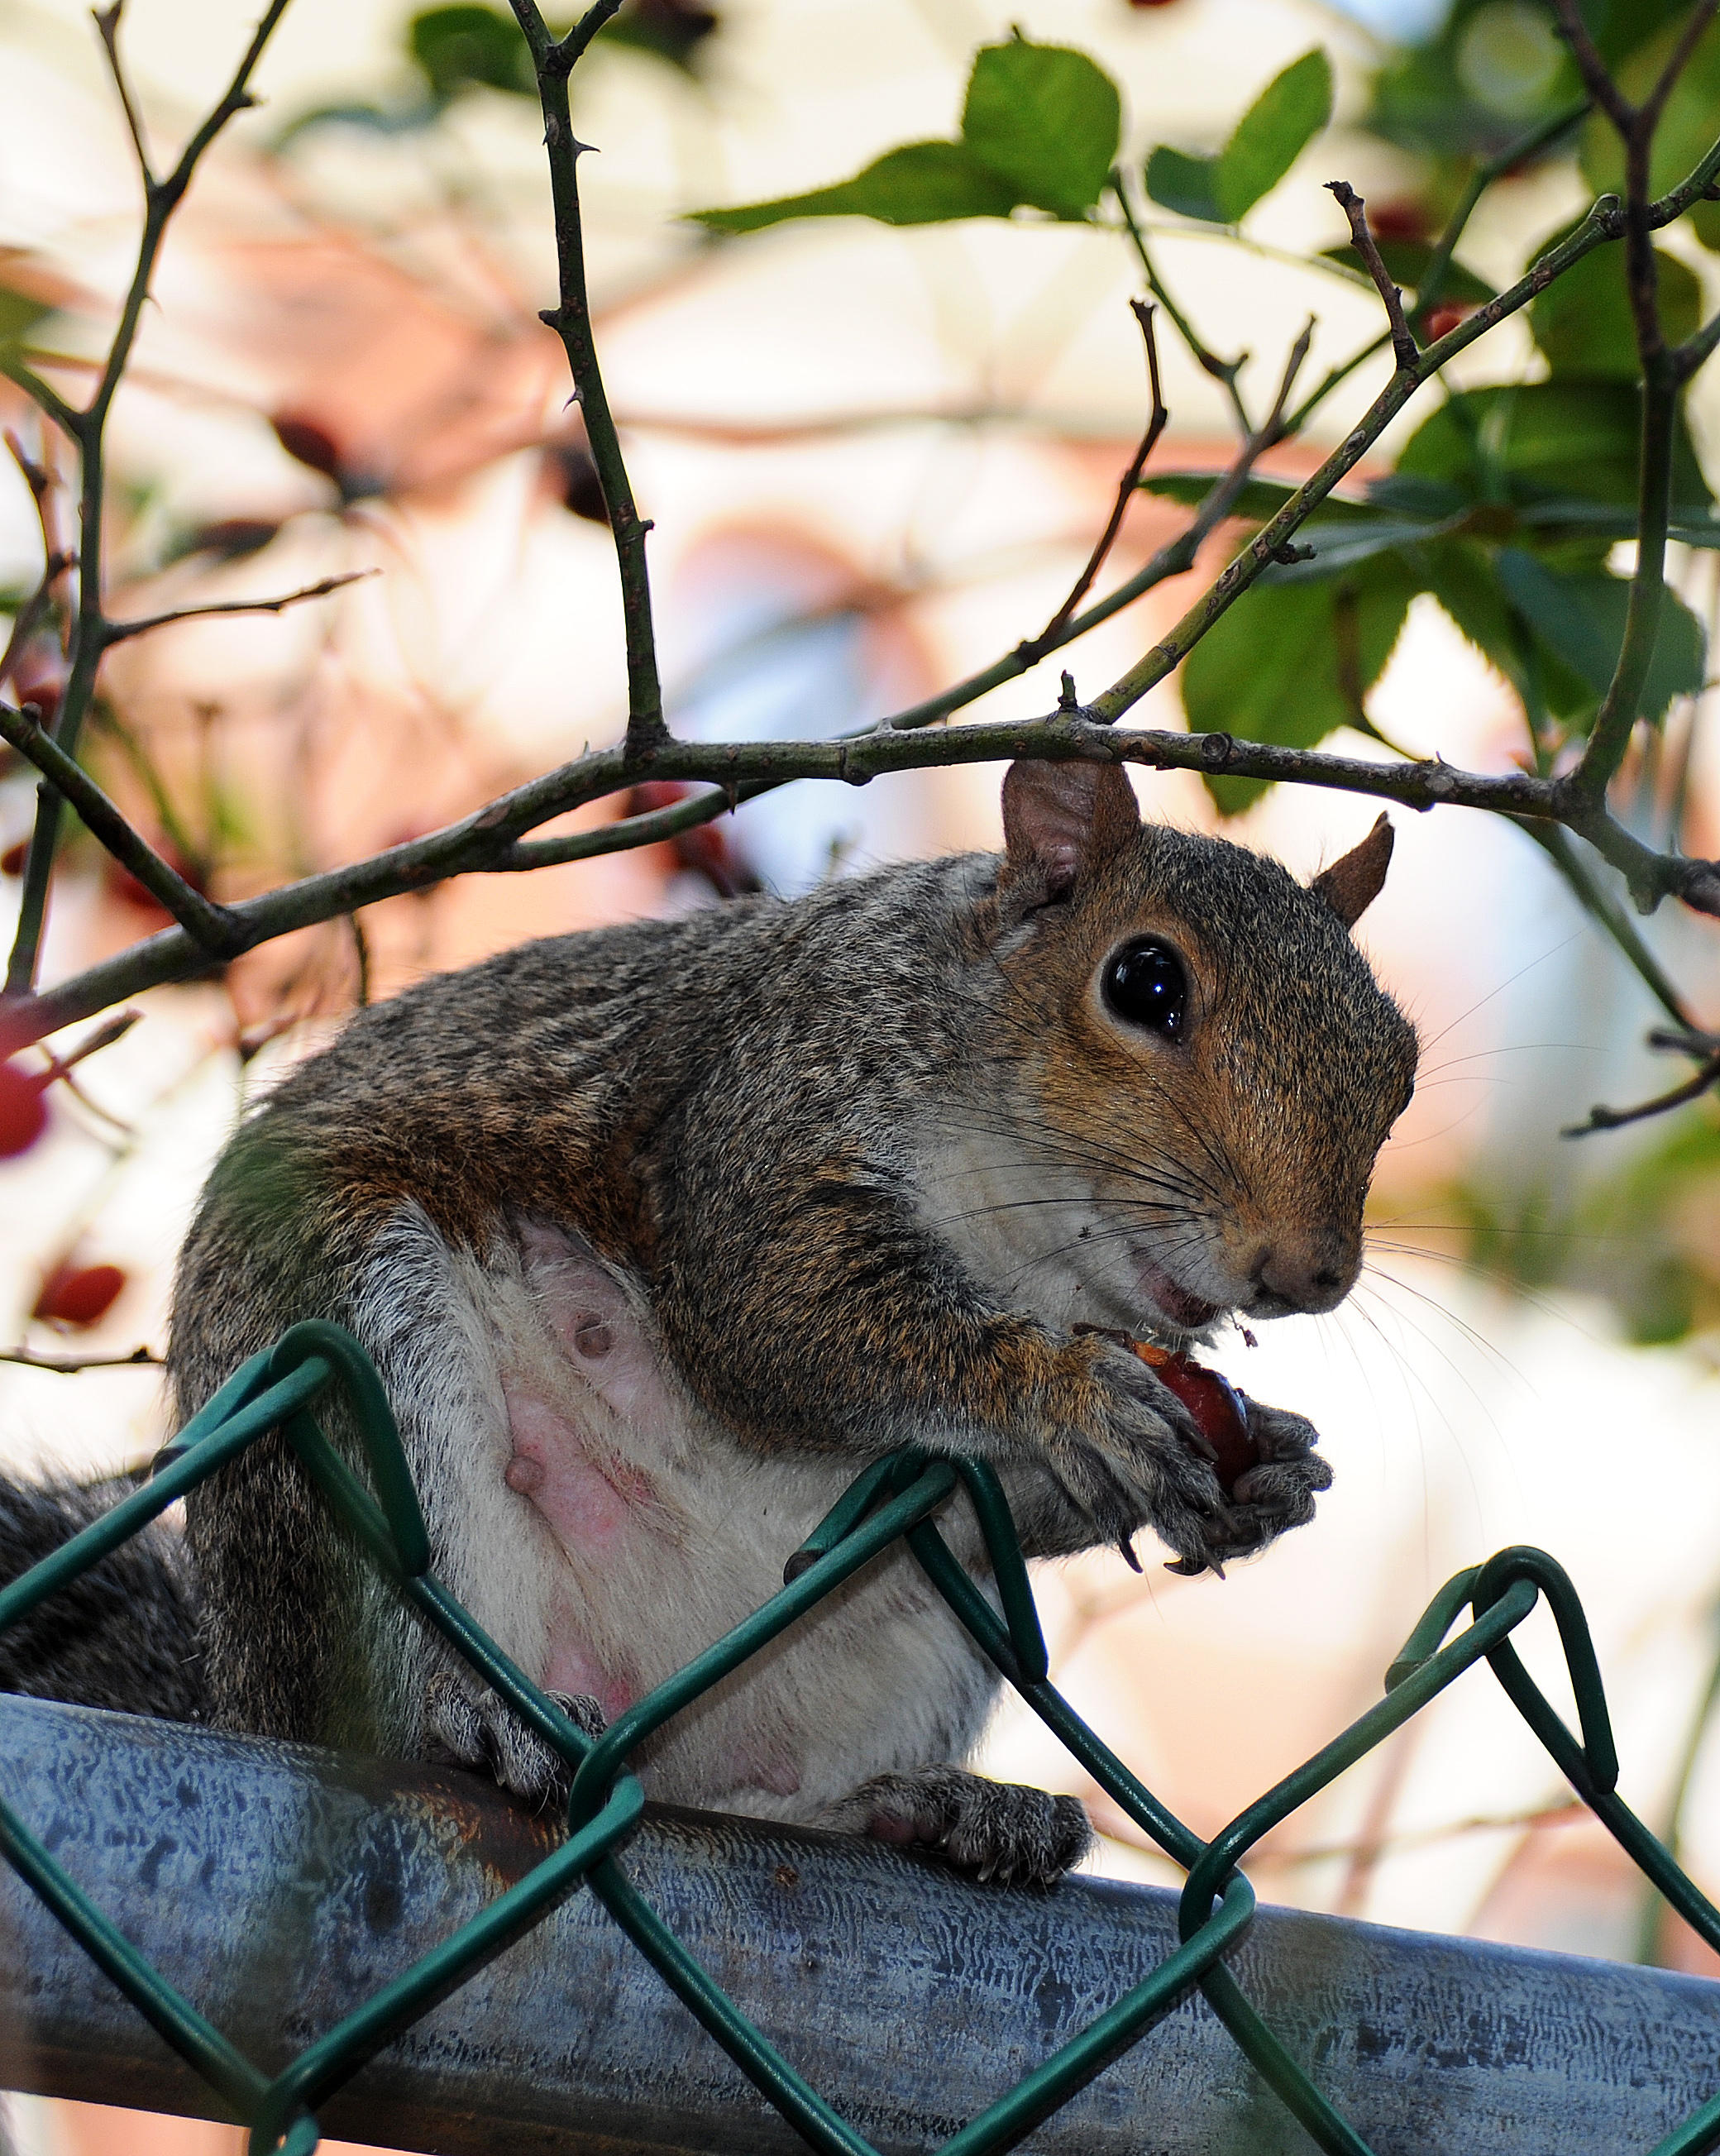 Squirrel Eating a Rose Hip